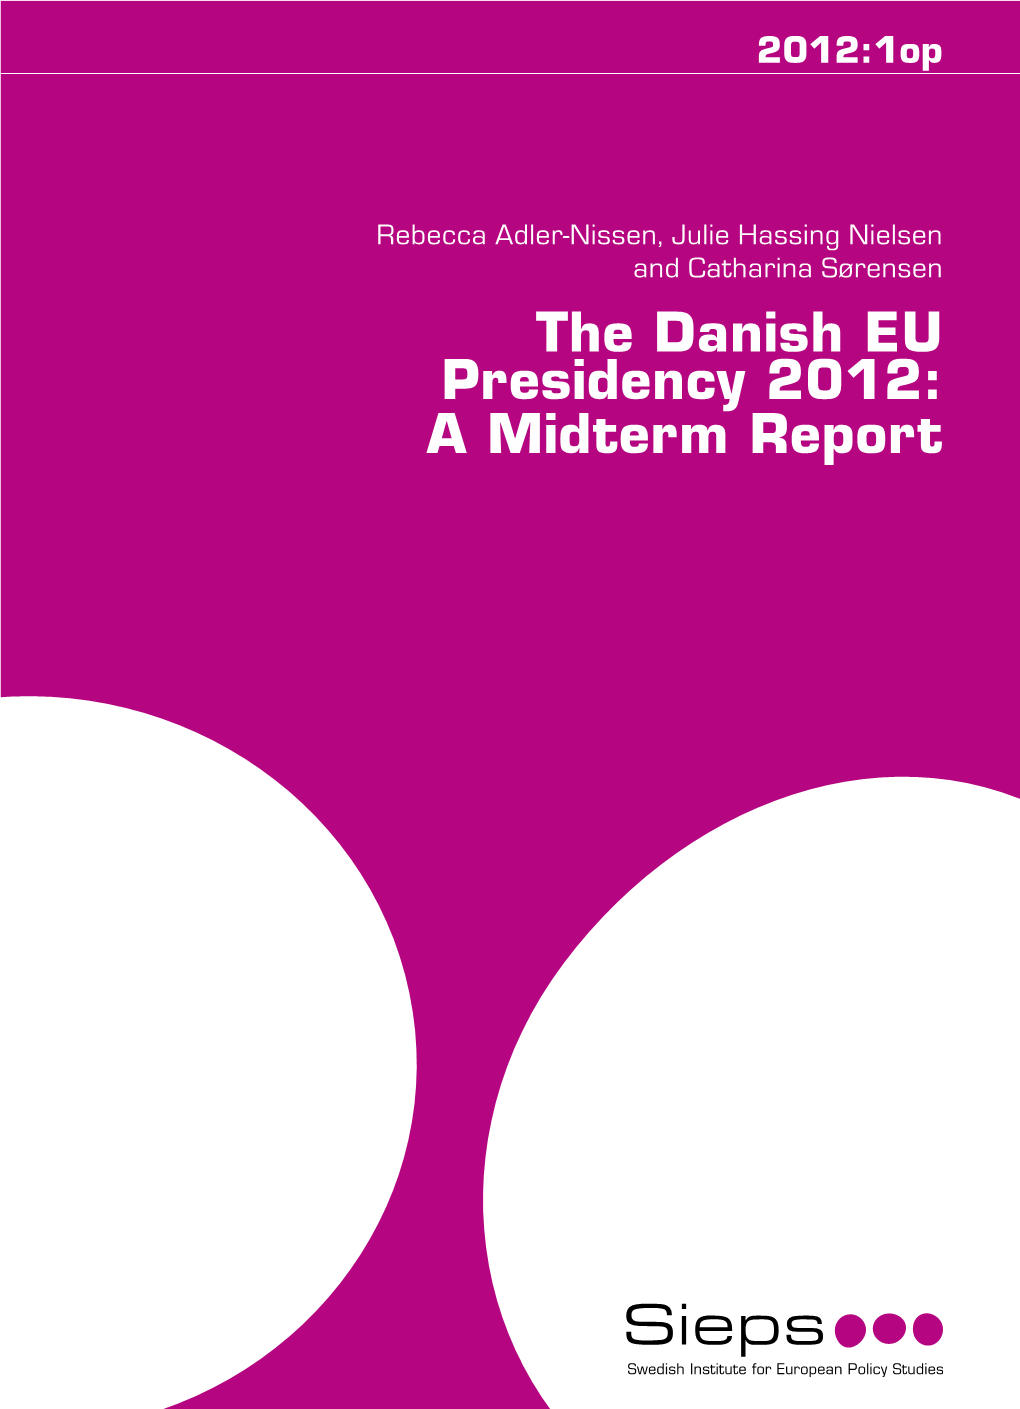 The Danish EU Presidency 2012: a Midterm Report, Sieps